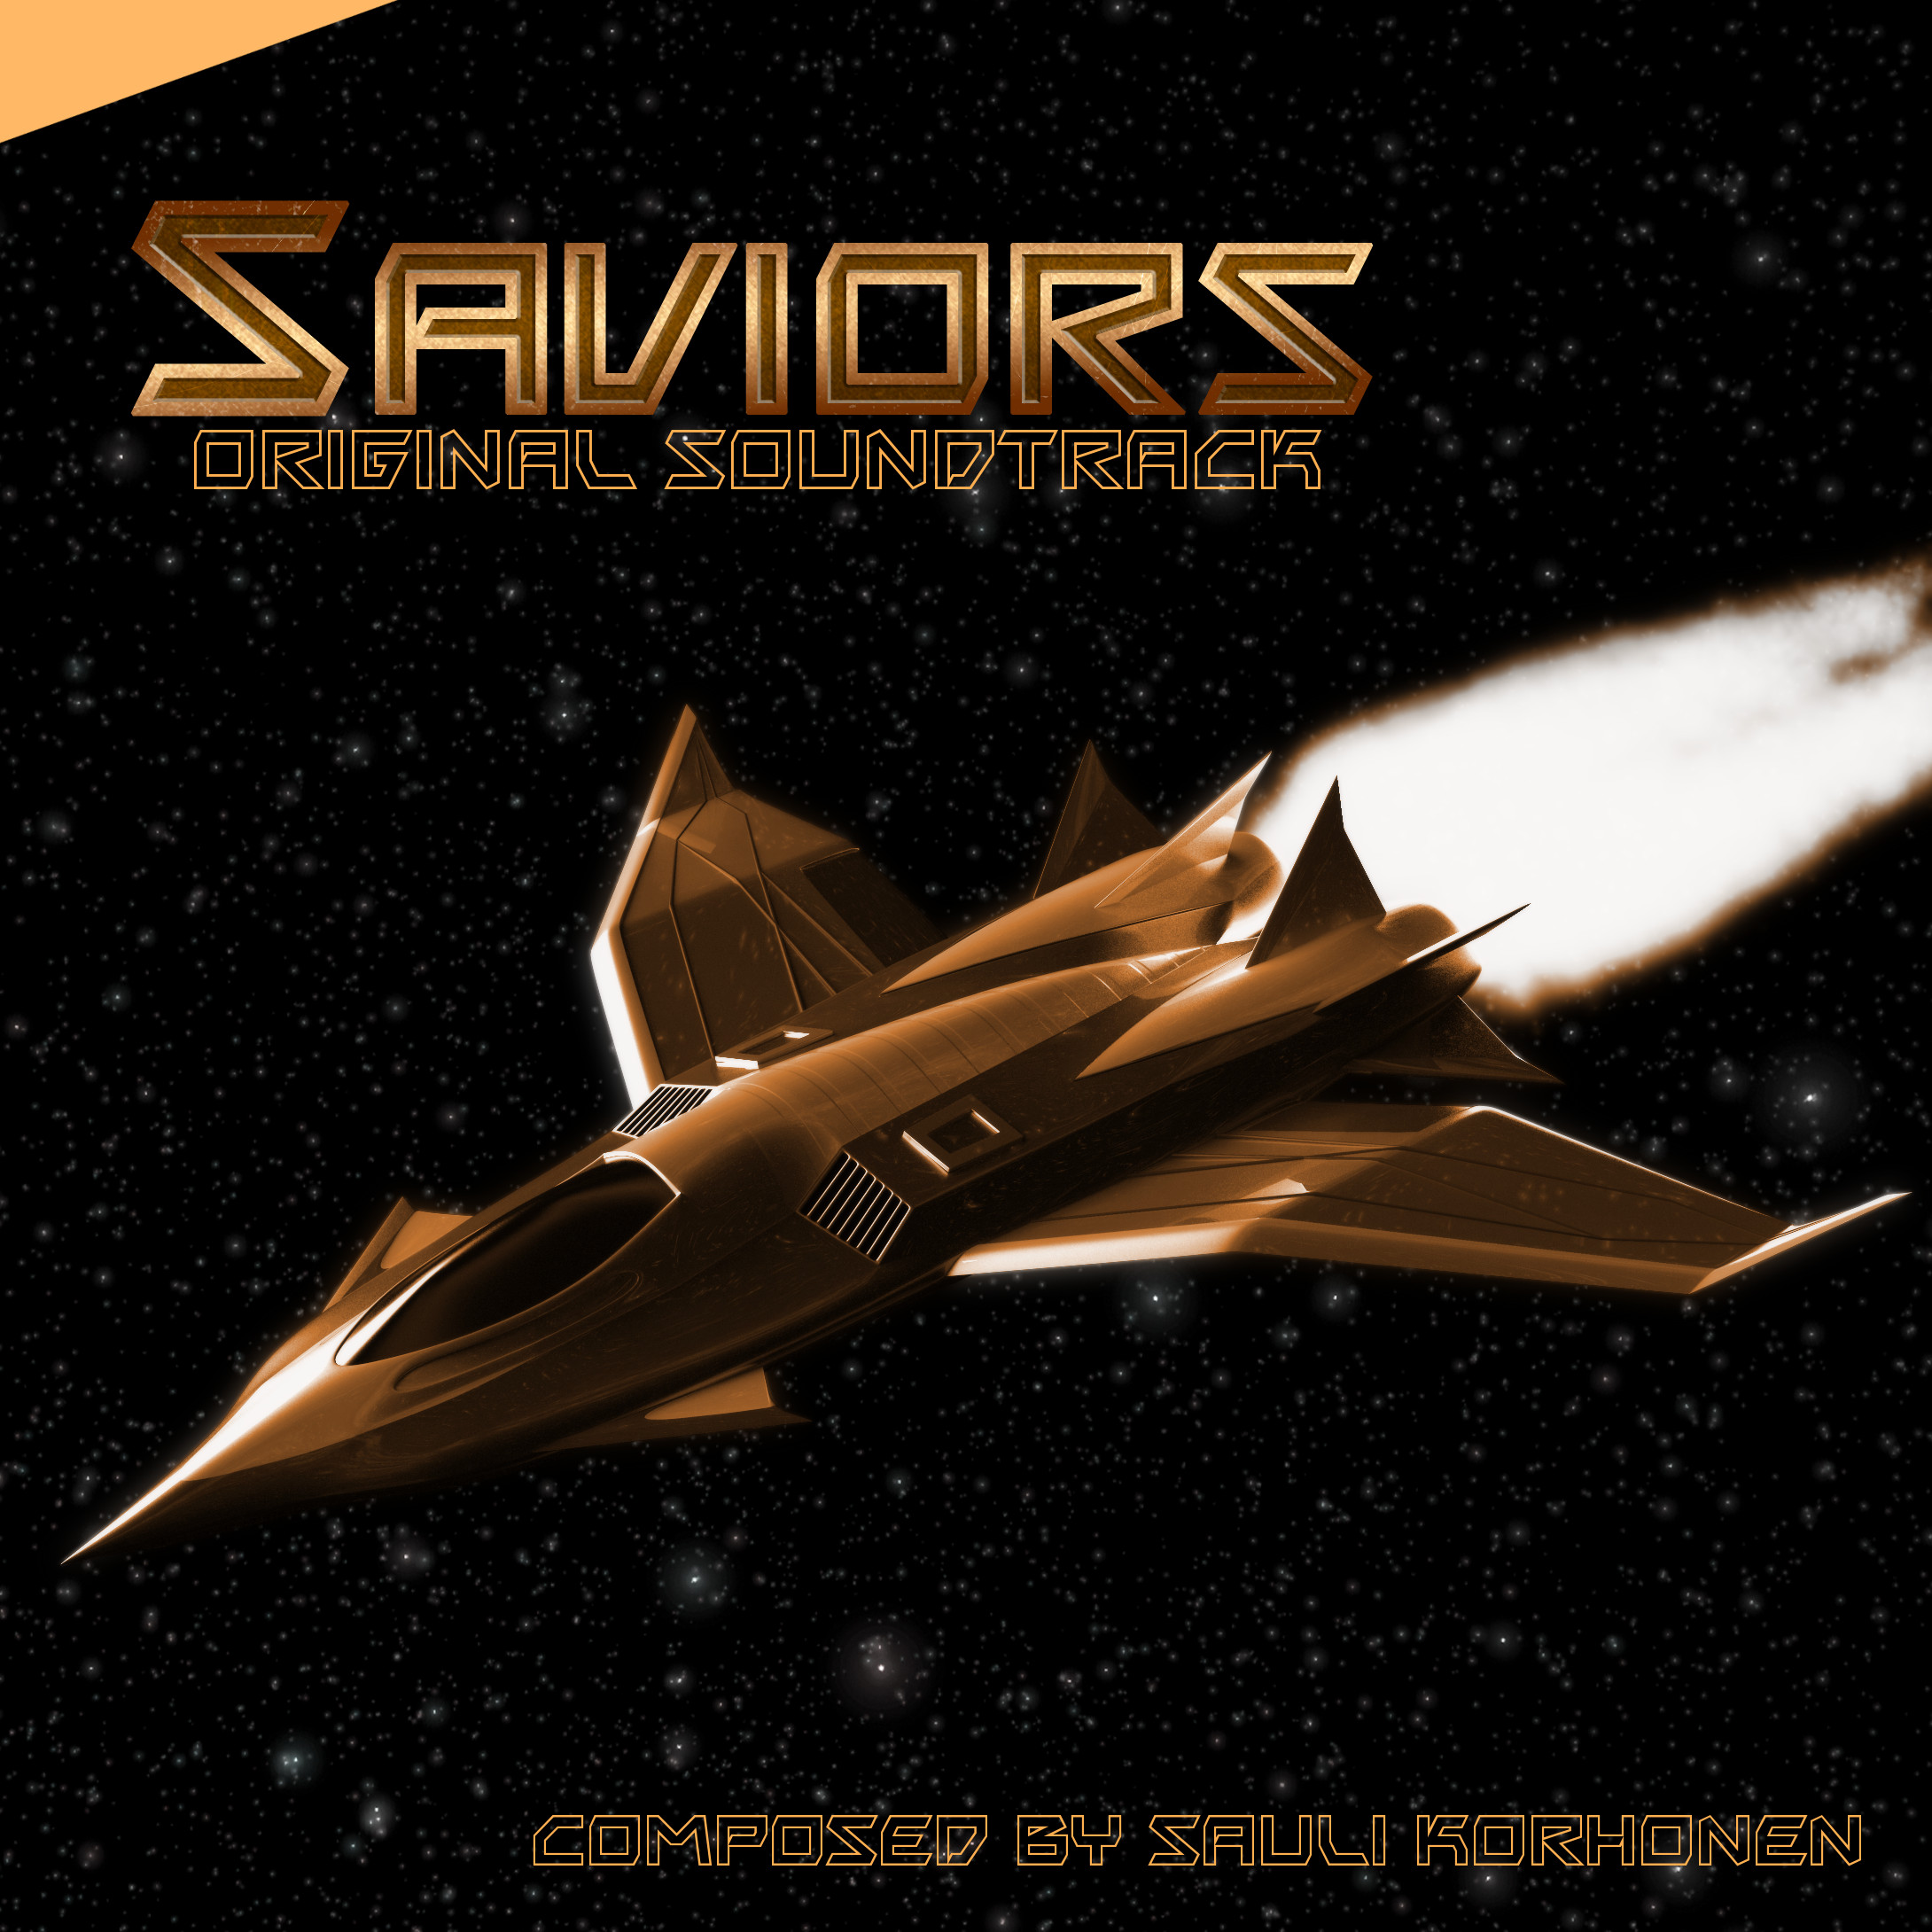 Star Saviors - Saviors OST DLC Steam Gift 21.46 $